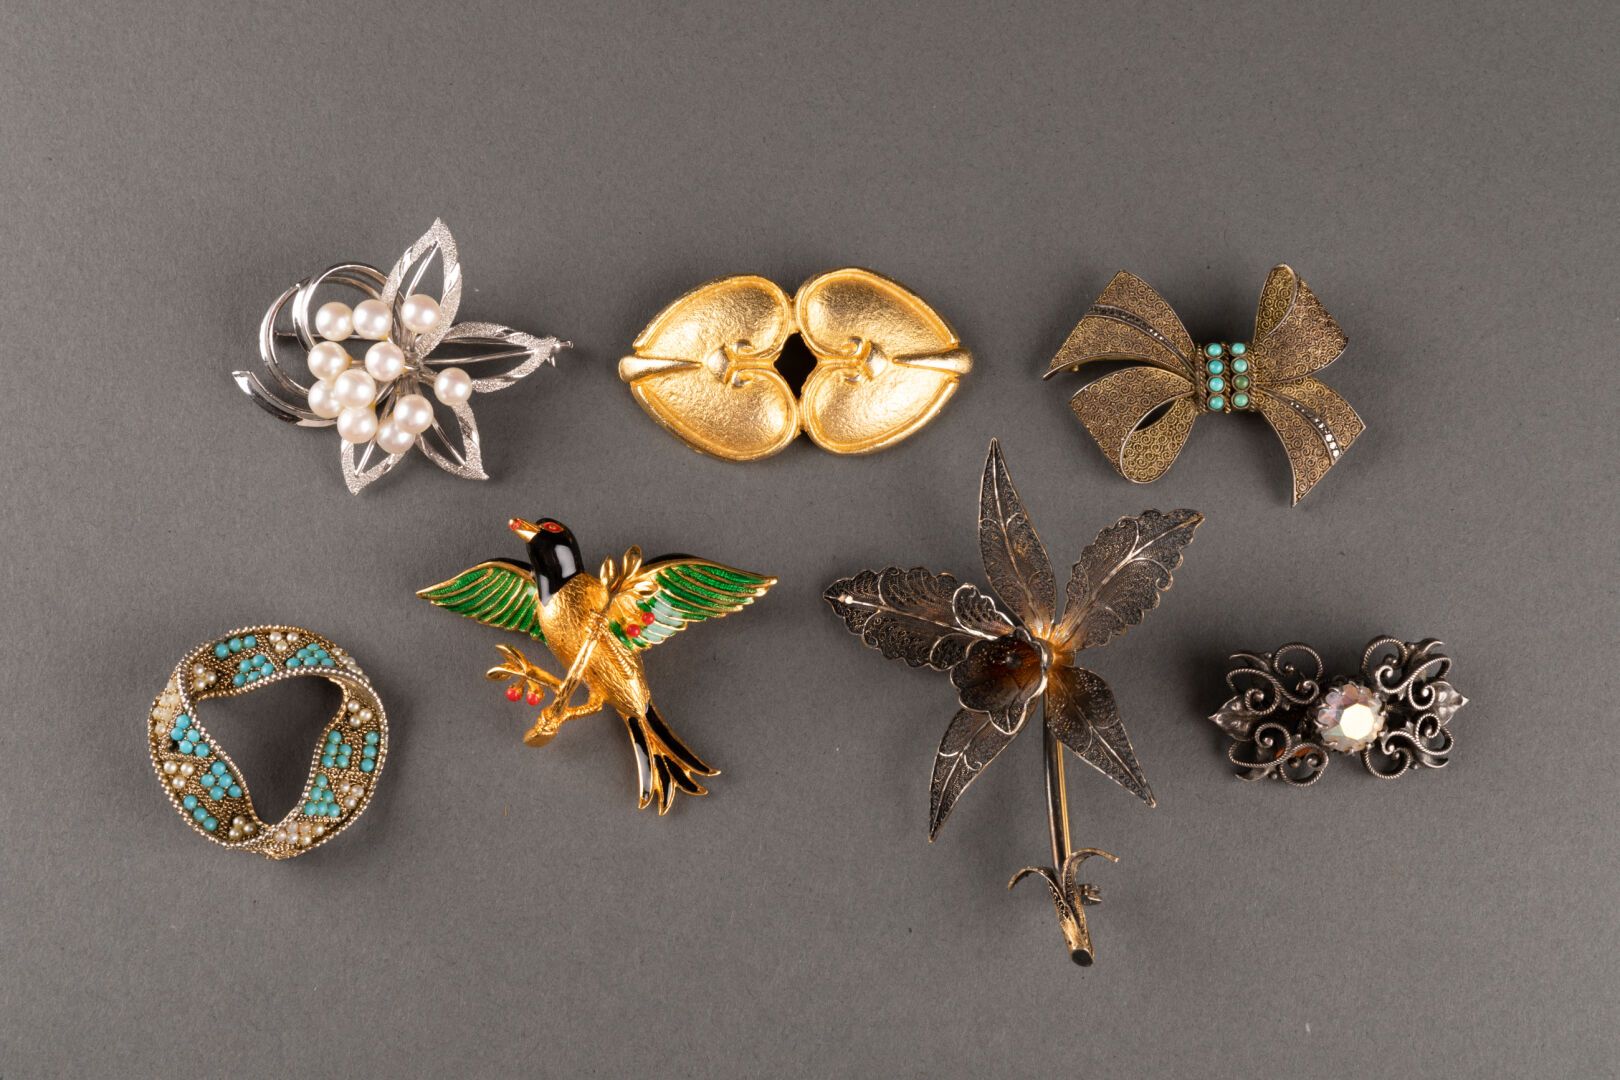 Null 包括7个针头在内的花式珠宝拍品

镀金金属，镀银金属，一个珐琅彩